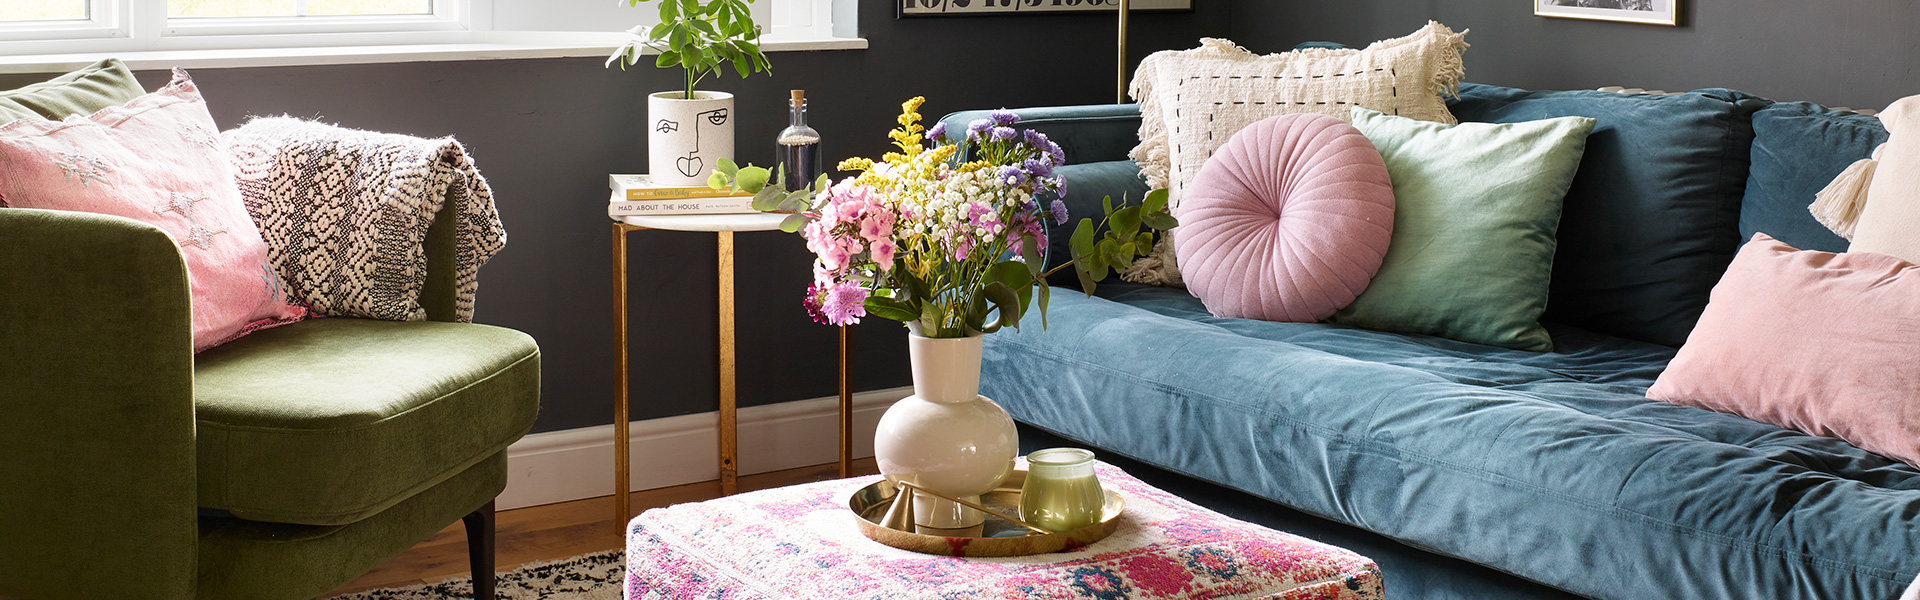 living room with colourful velvet sofas - good homes february 2021 issue - goodhomesmagazine.com